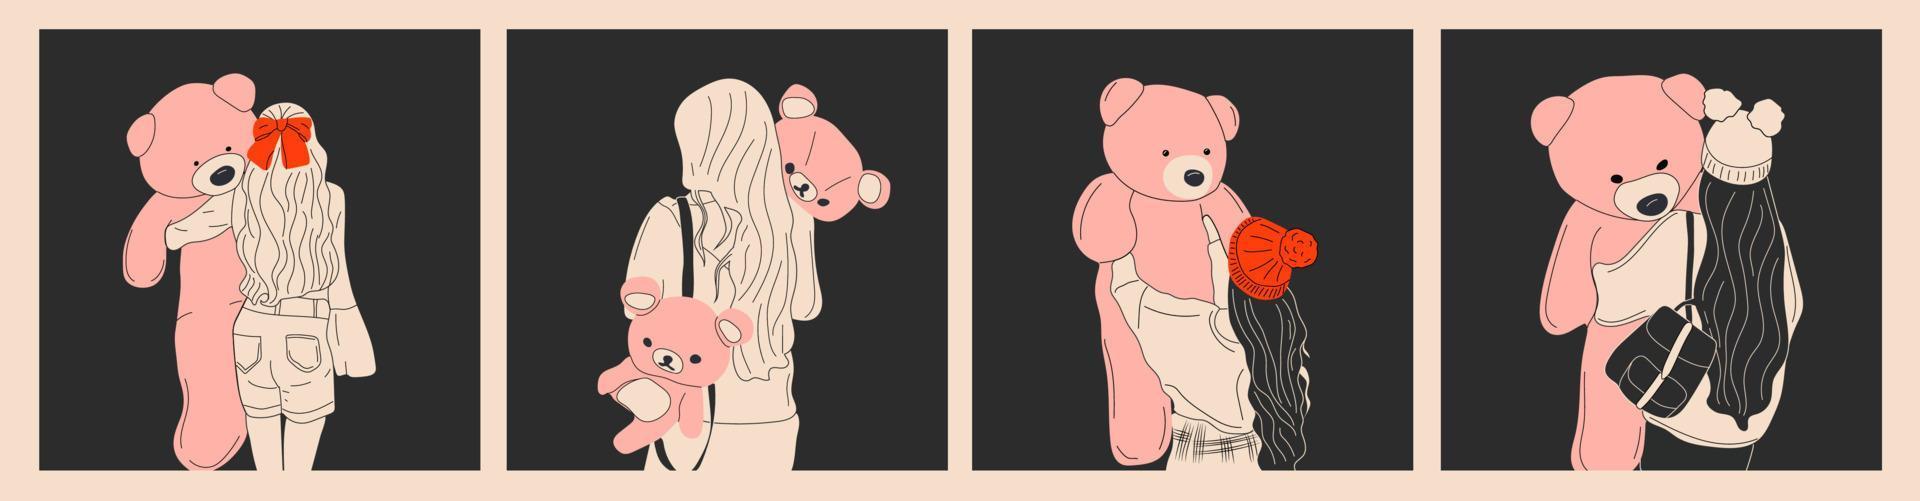 Set of four Pretty women hug a giant teddy bear doll. Fashion girl illustration on dark background .Love, Valentine's Day. vector